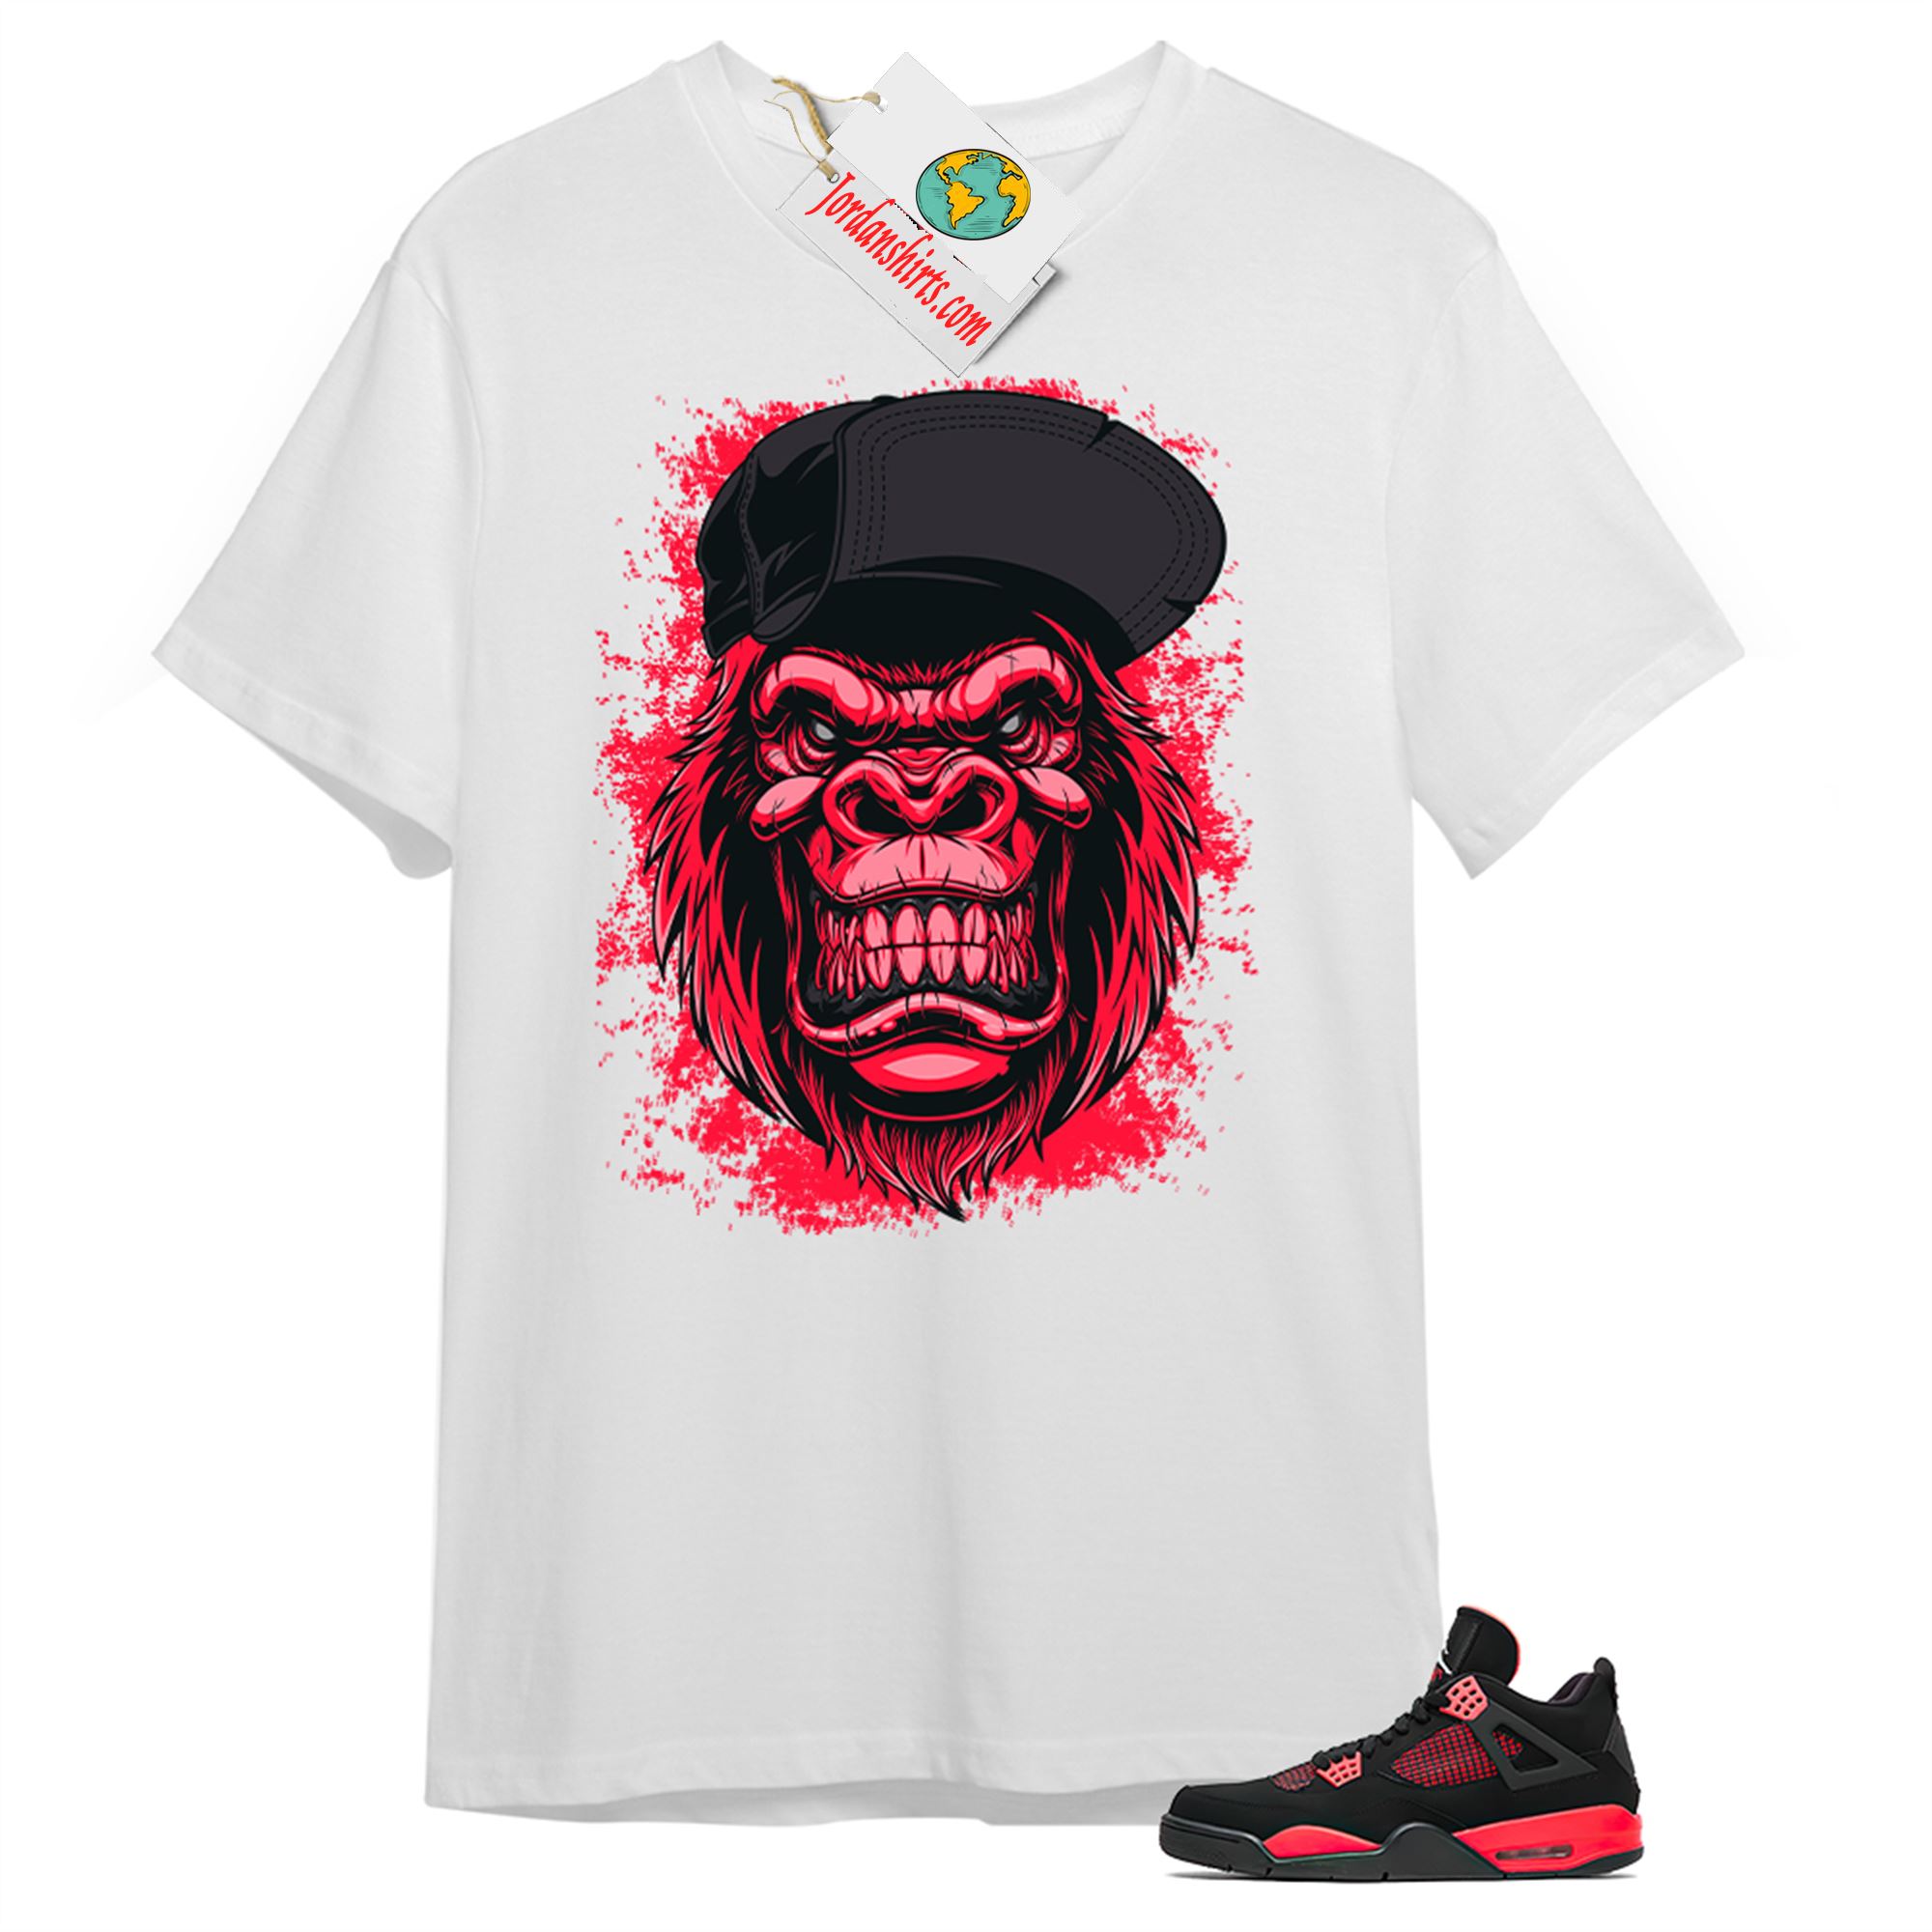 Jordan 4 Shirt, Ferocious Gorilla White T-shirt Air Jordan 4 Red Thunder 4s Size Up To 5xl